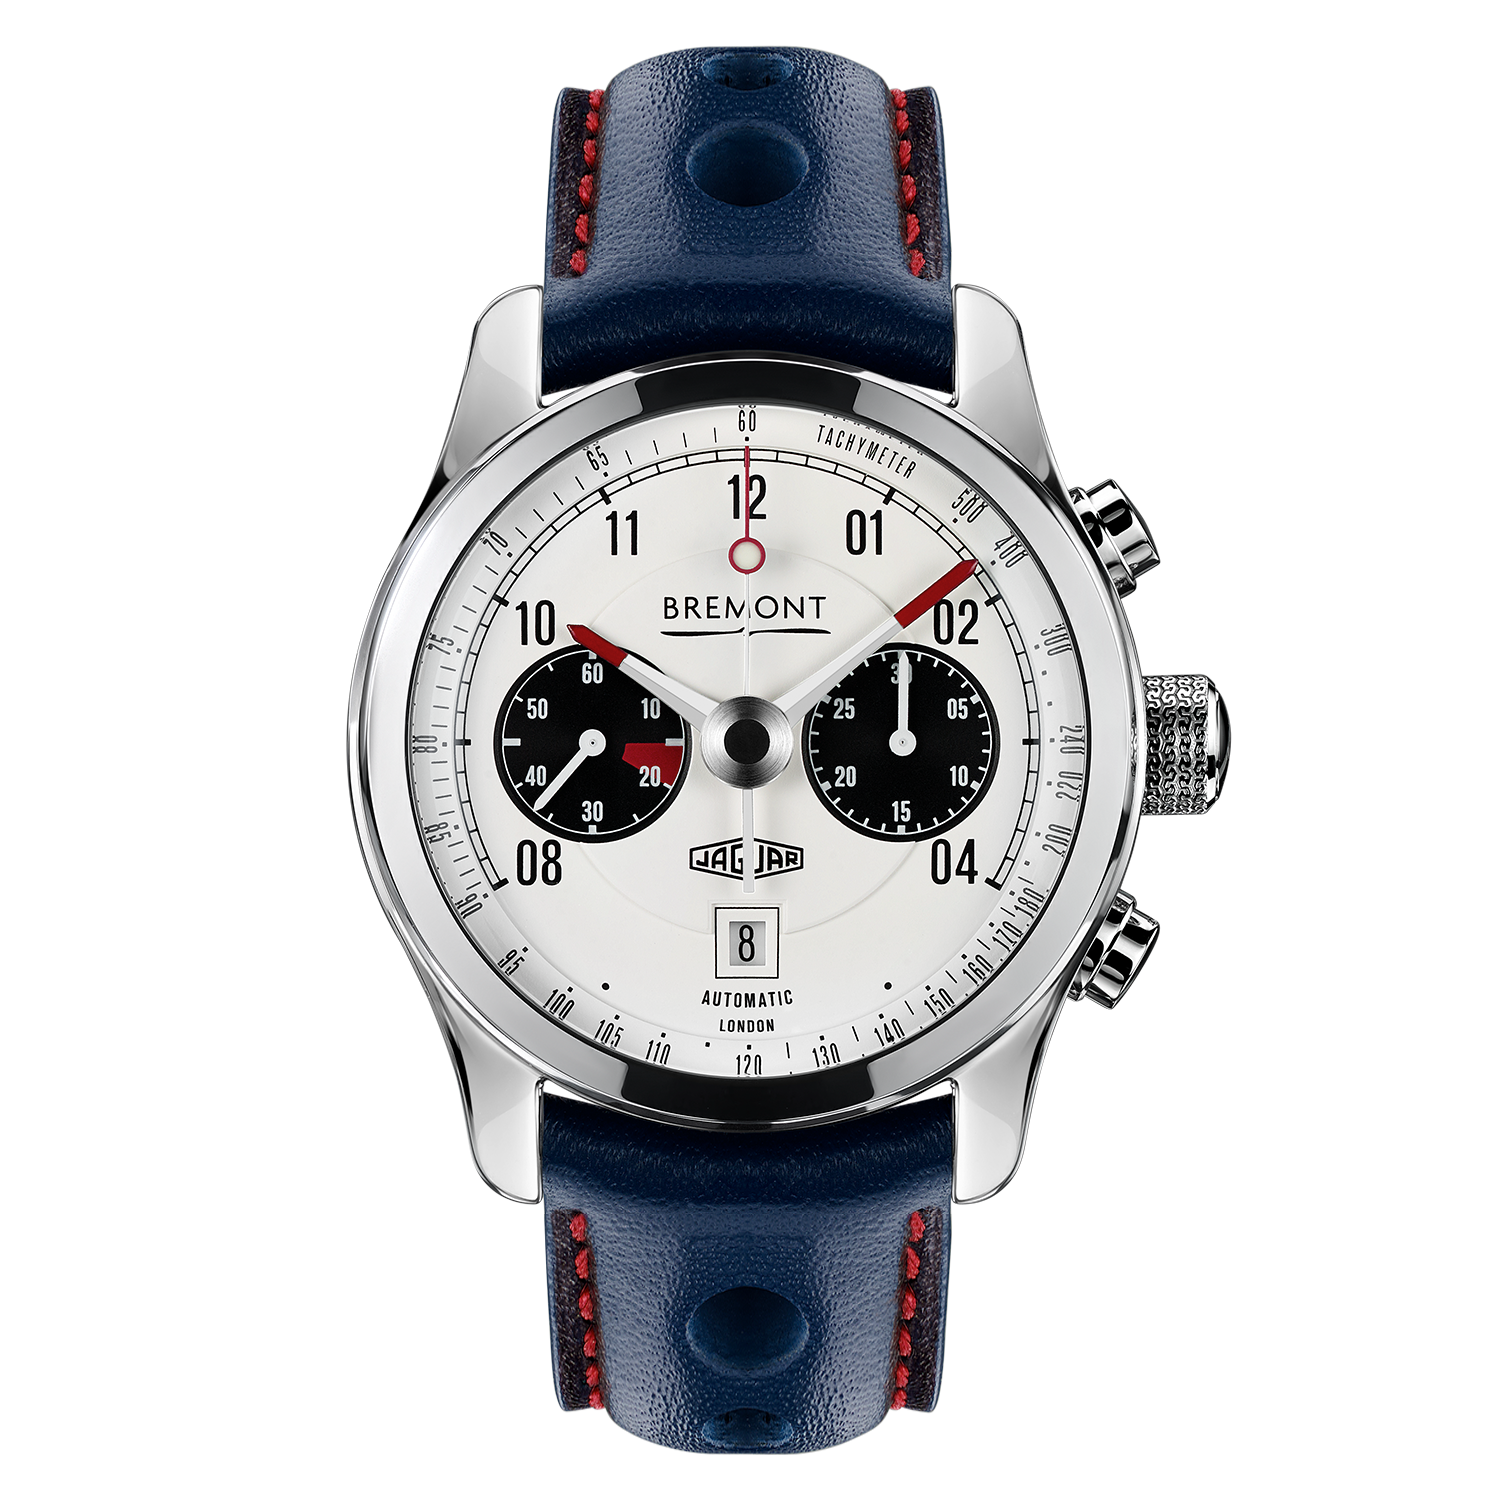 MKII Company (US) – Jaguar Bremont Watch